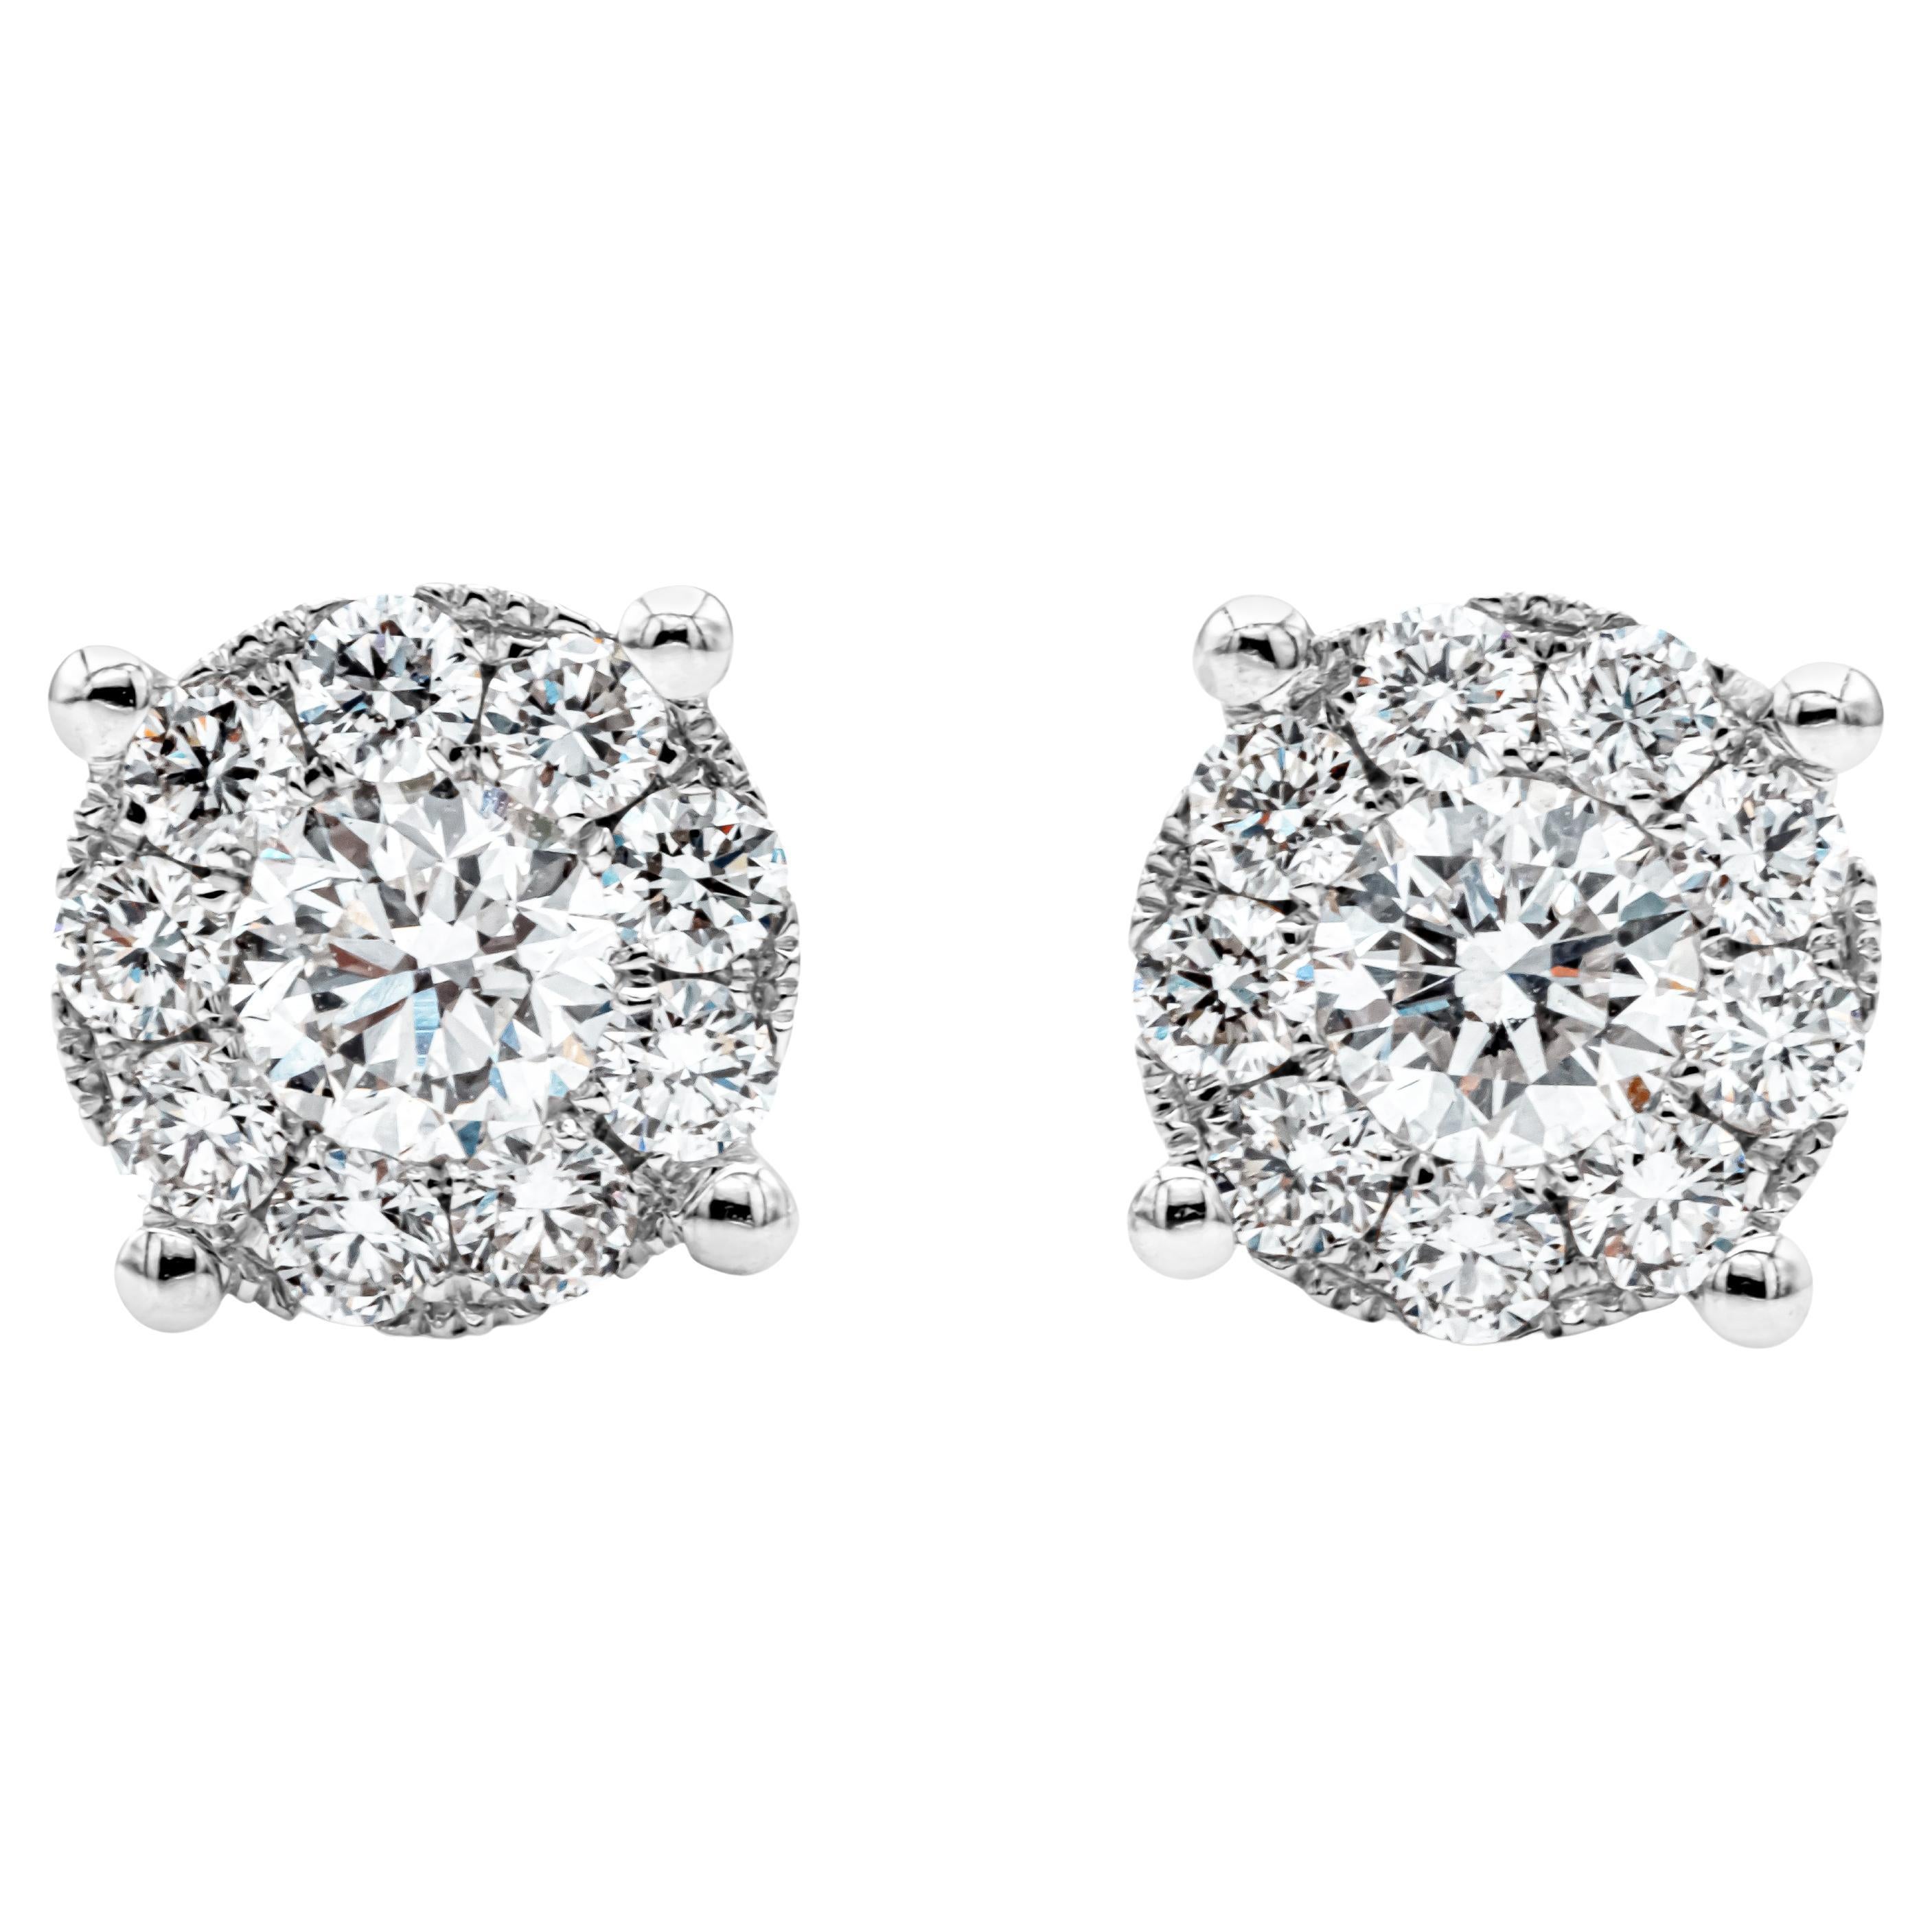 Roman Malakov 1.13 Carats Total Brilliant Round Diamond Cluster Stud Earrings For Sale